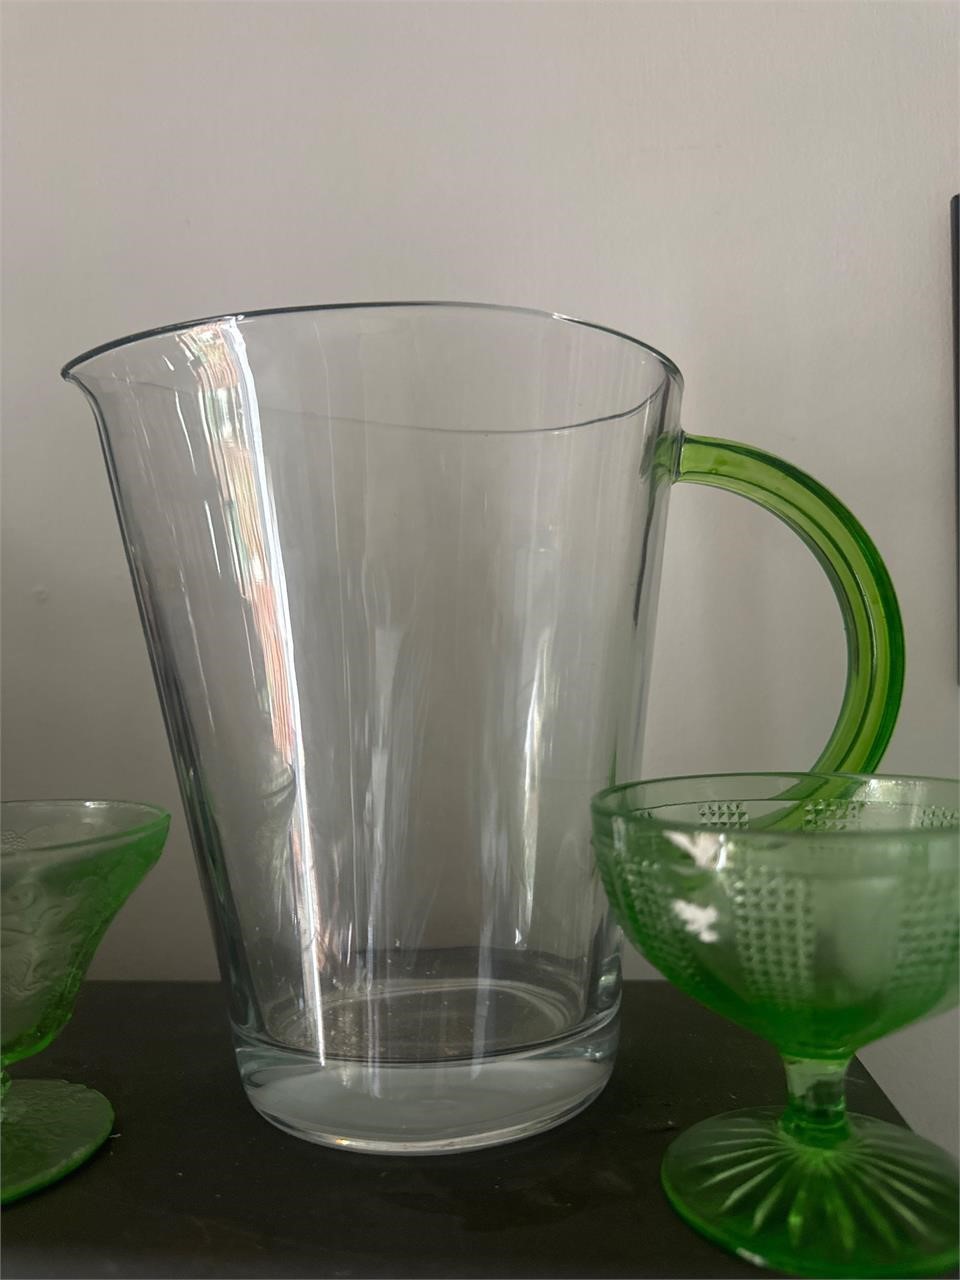 Uranium glass and pitcher lot